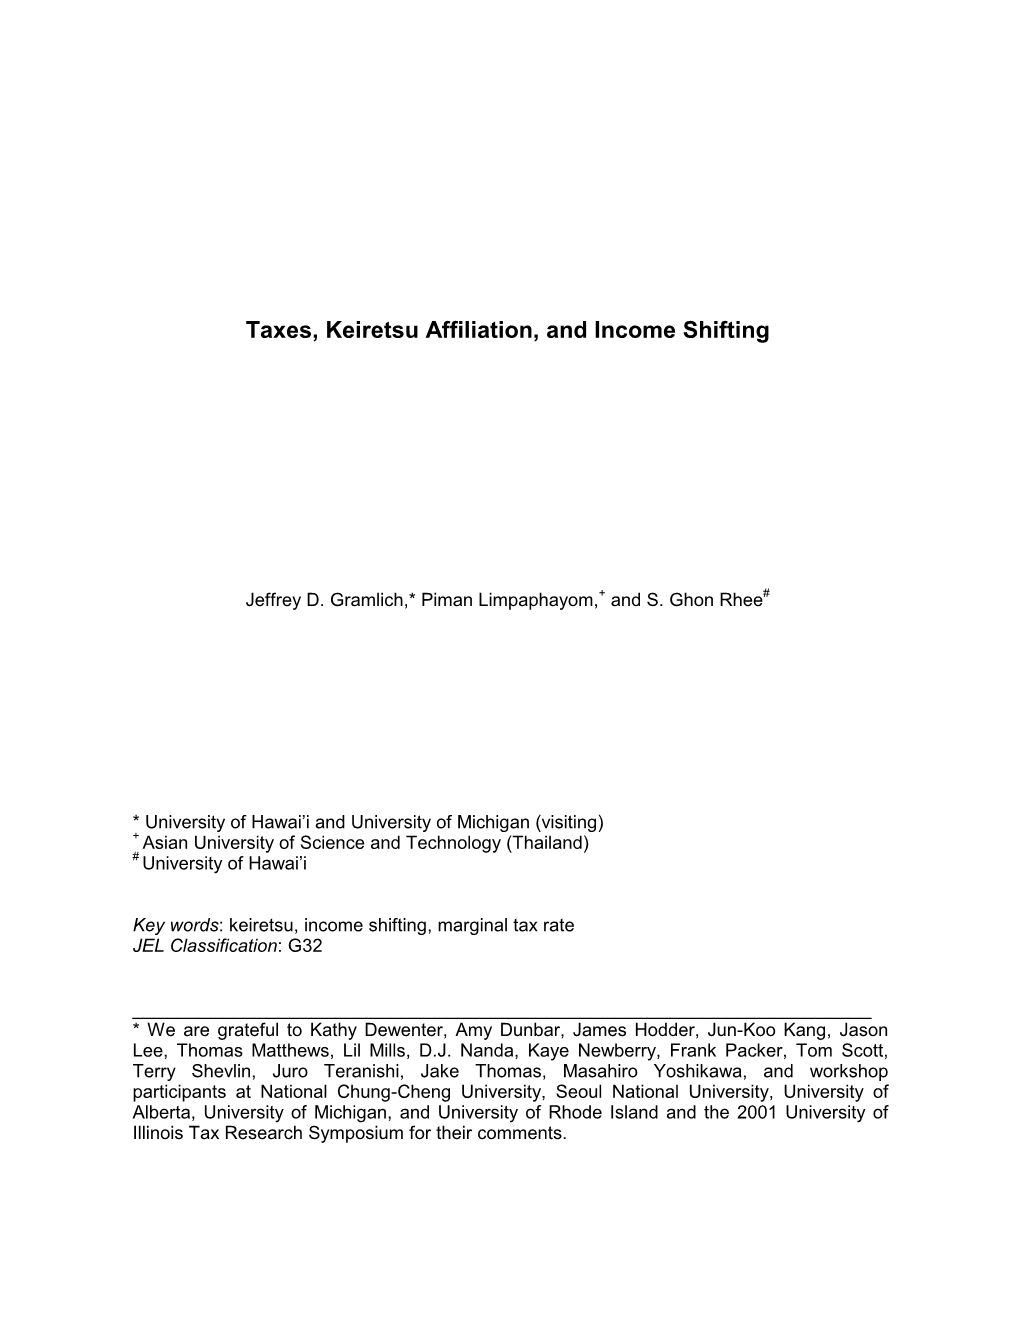 Taxes and Horizontal Corporate Group (Keiretsu) Affiliation